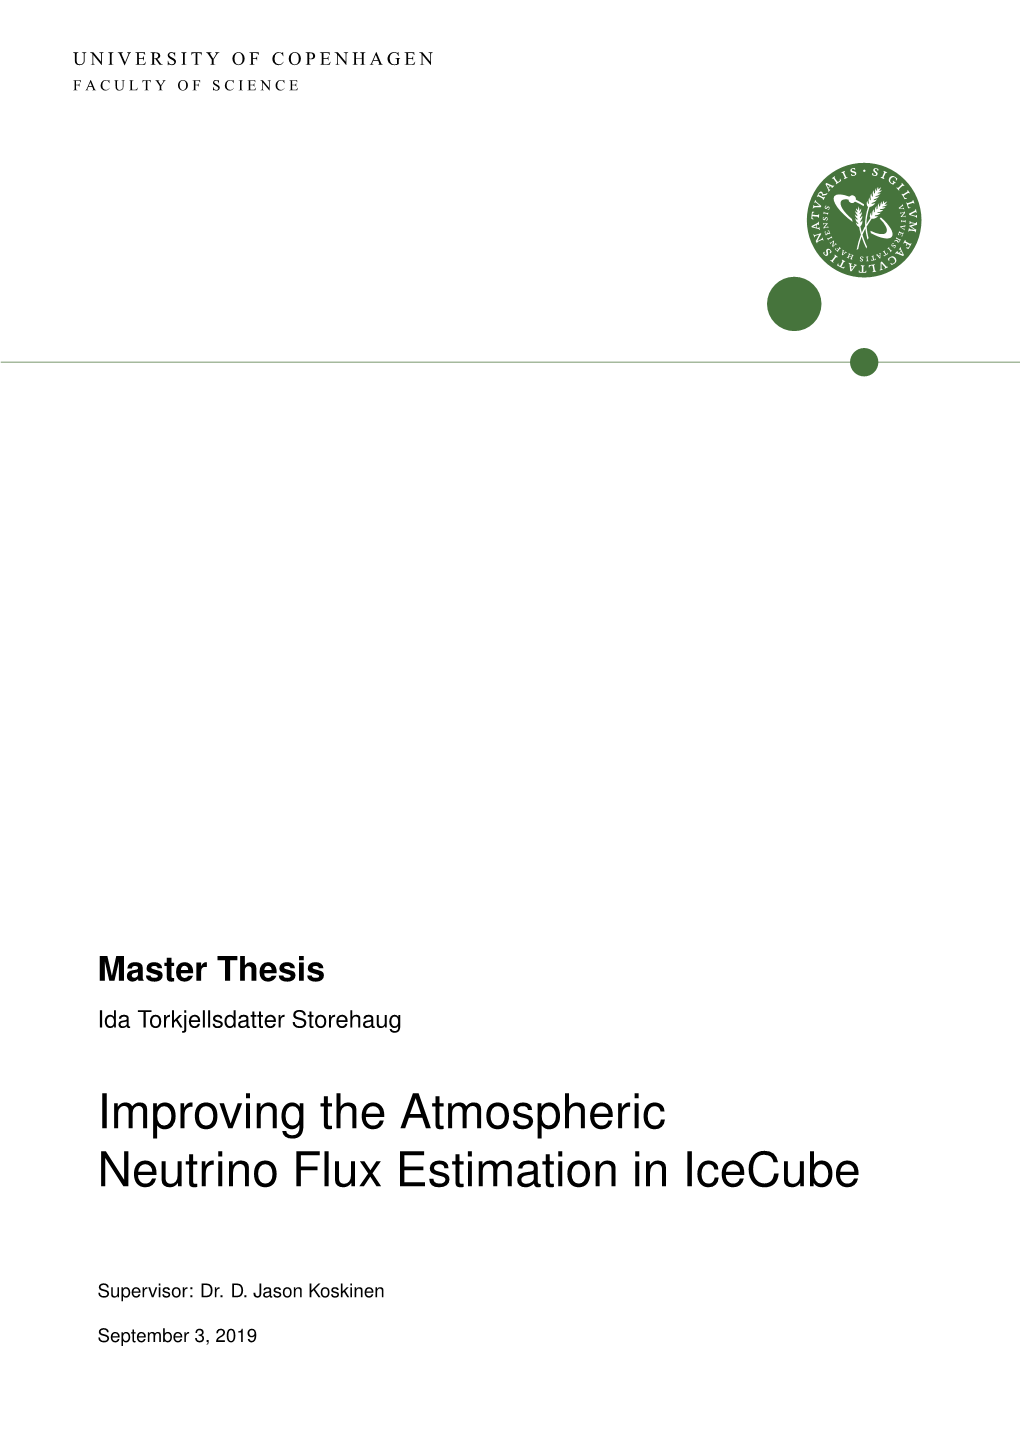 Improving the Atmospheric Neutrino Flux Estimation in Icecube